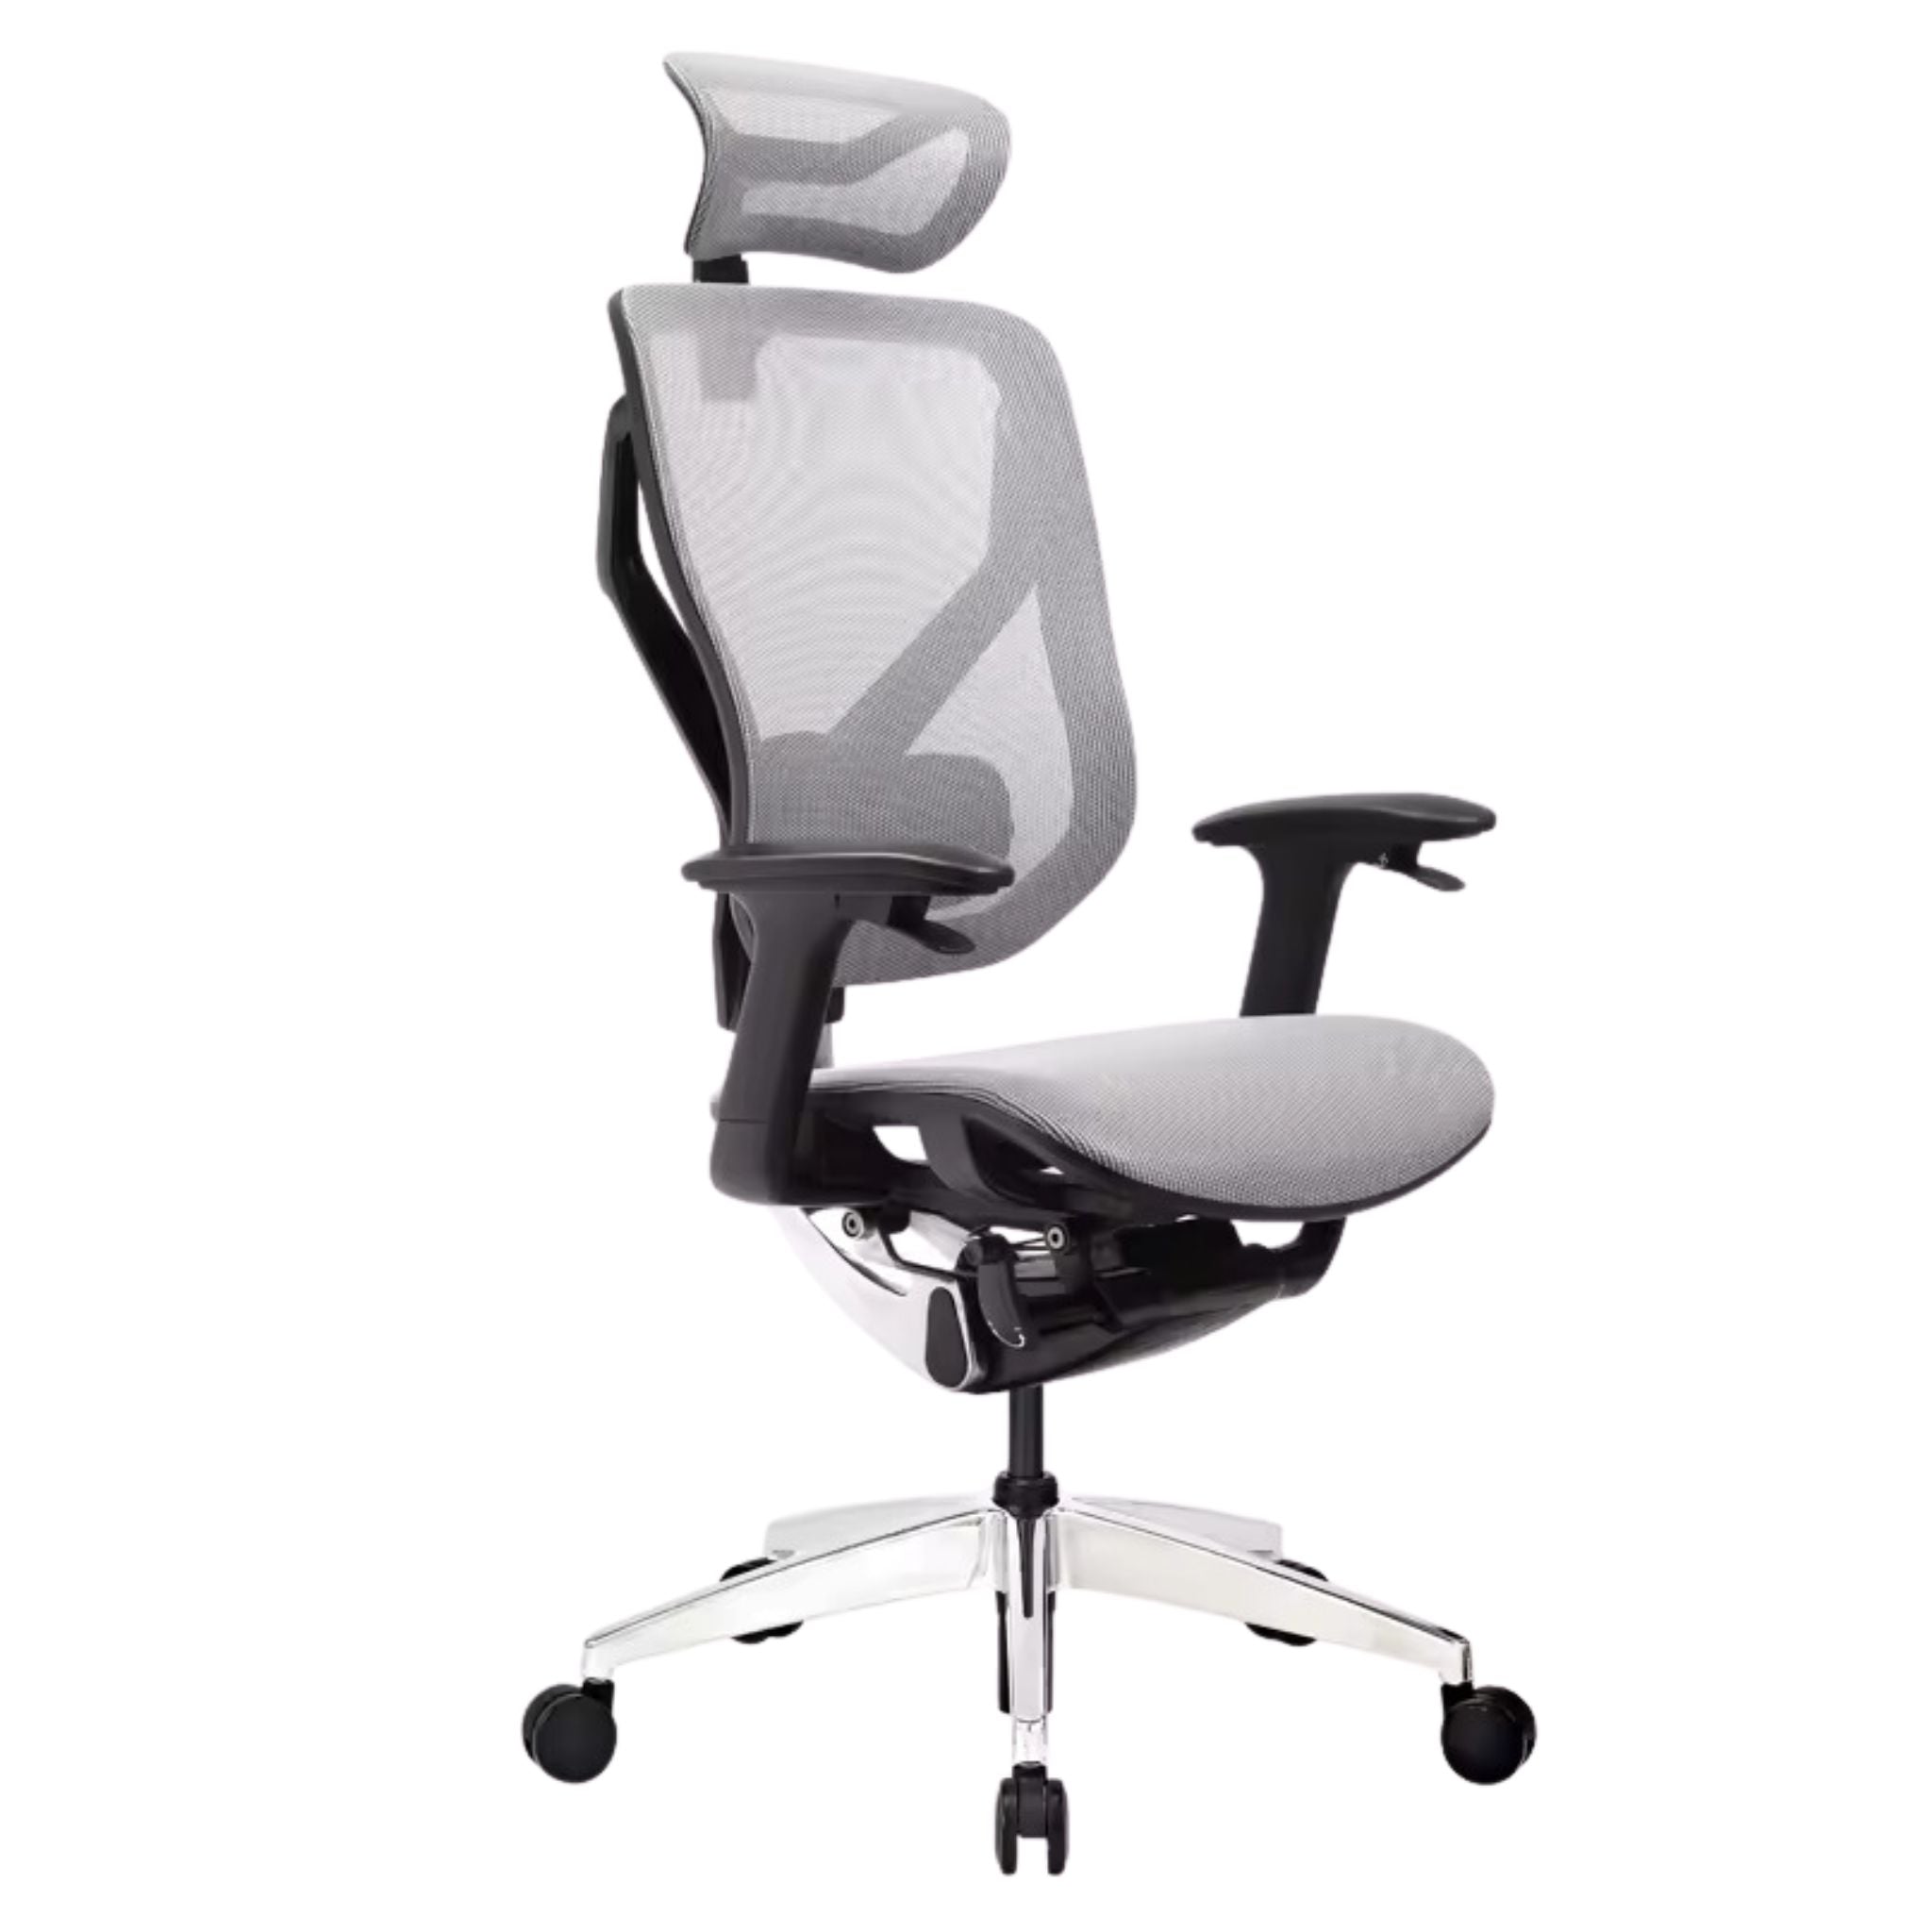 VIDA V7-X chair